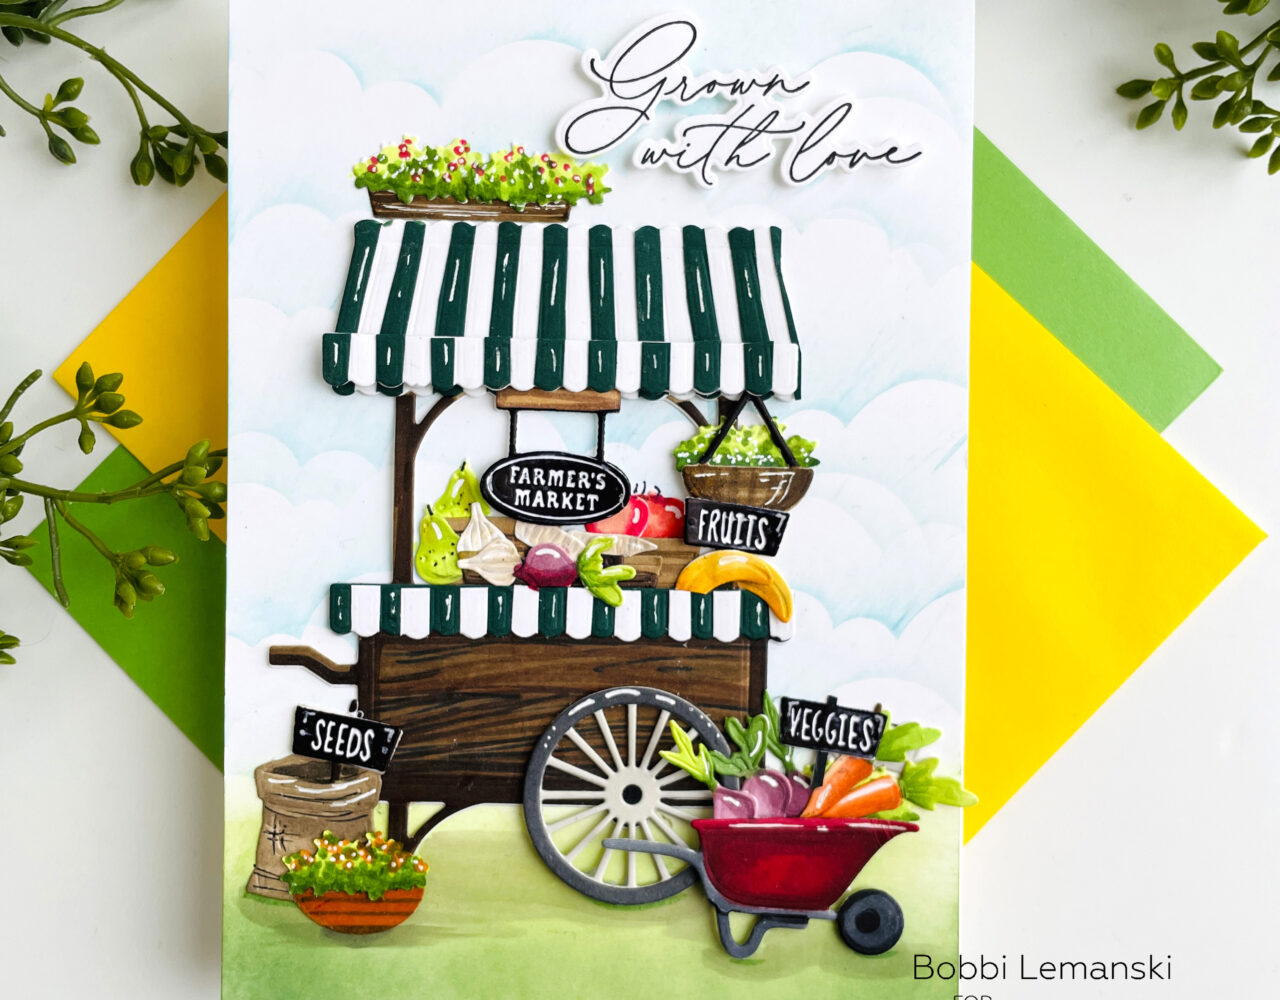 A Farmers’ Market Vegetable Cart